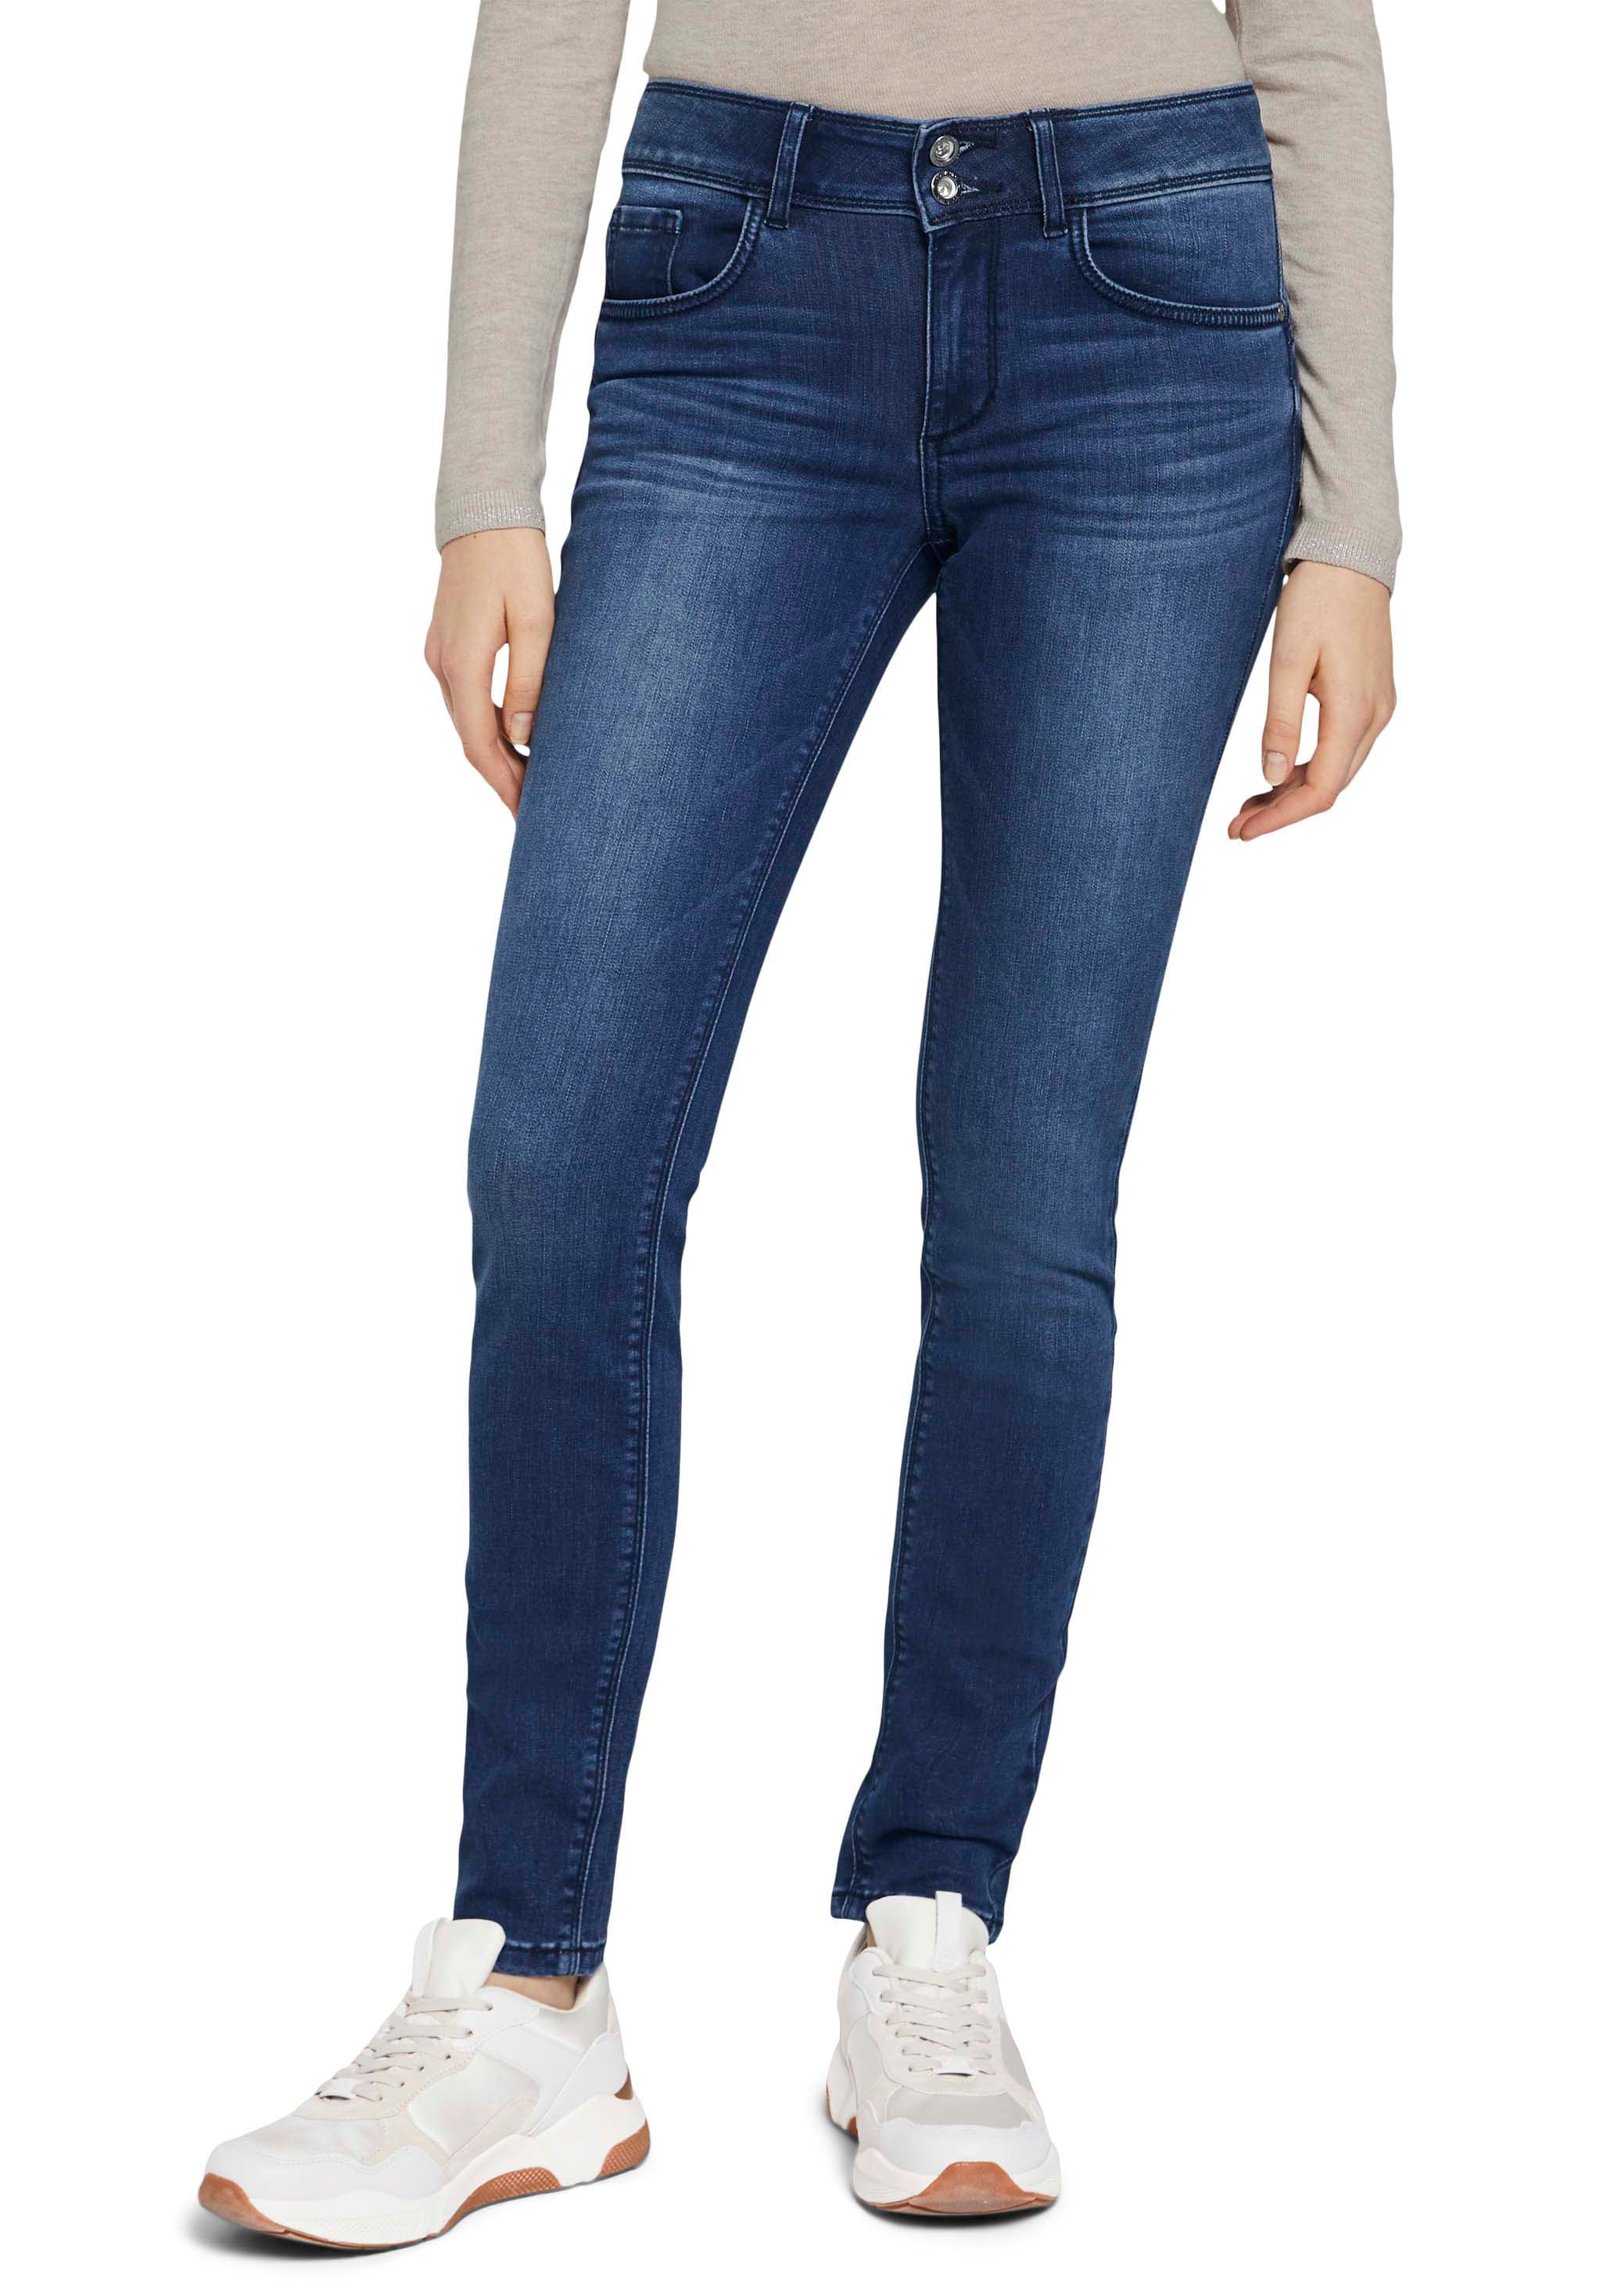 TOM TAILOR Skinny-fit-Jeans »Alexa Skinny«, mit Doppelknopf-Verschluss